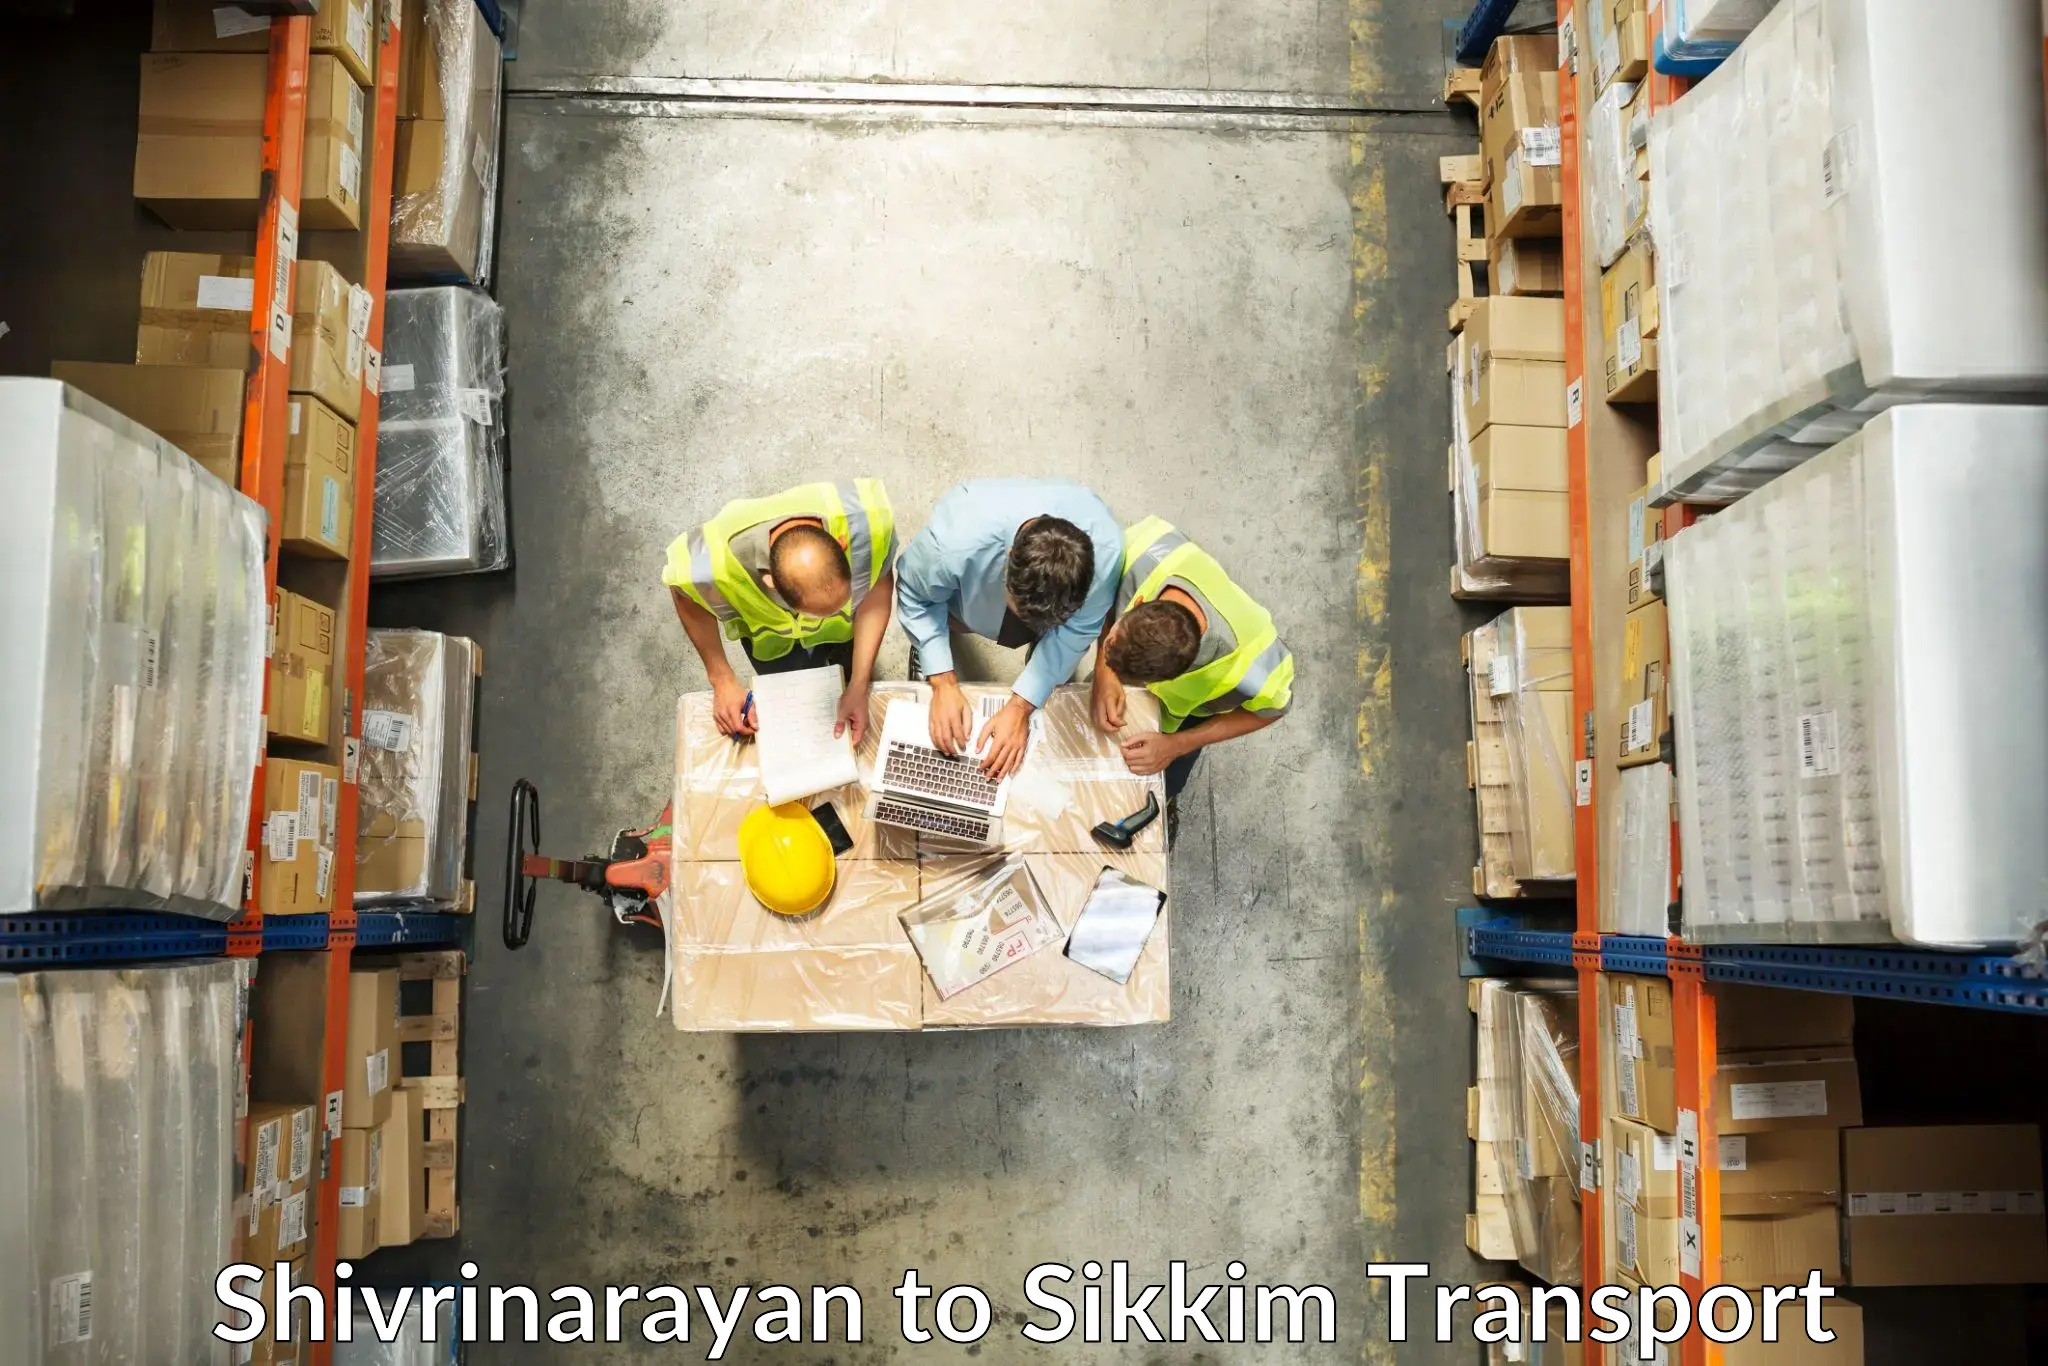 Truck transport companies in India Shivrinarayan to Sikkim